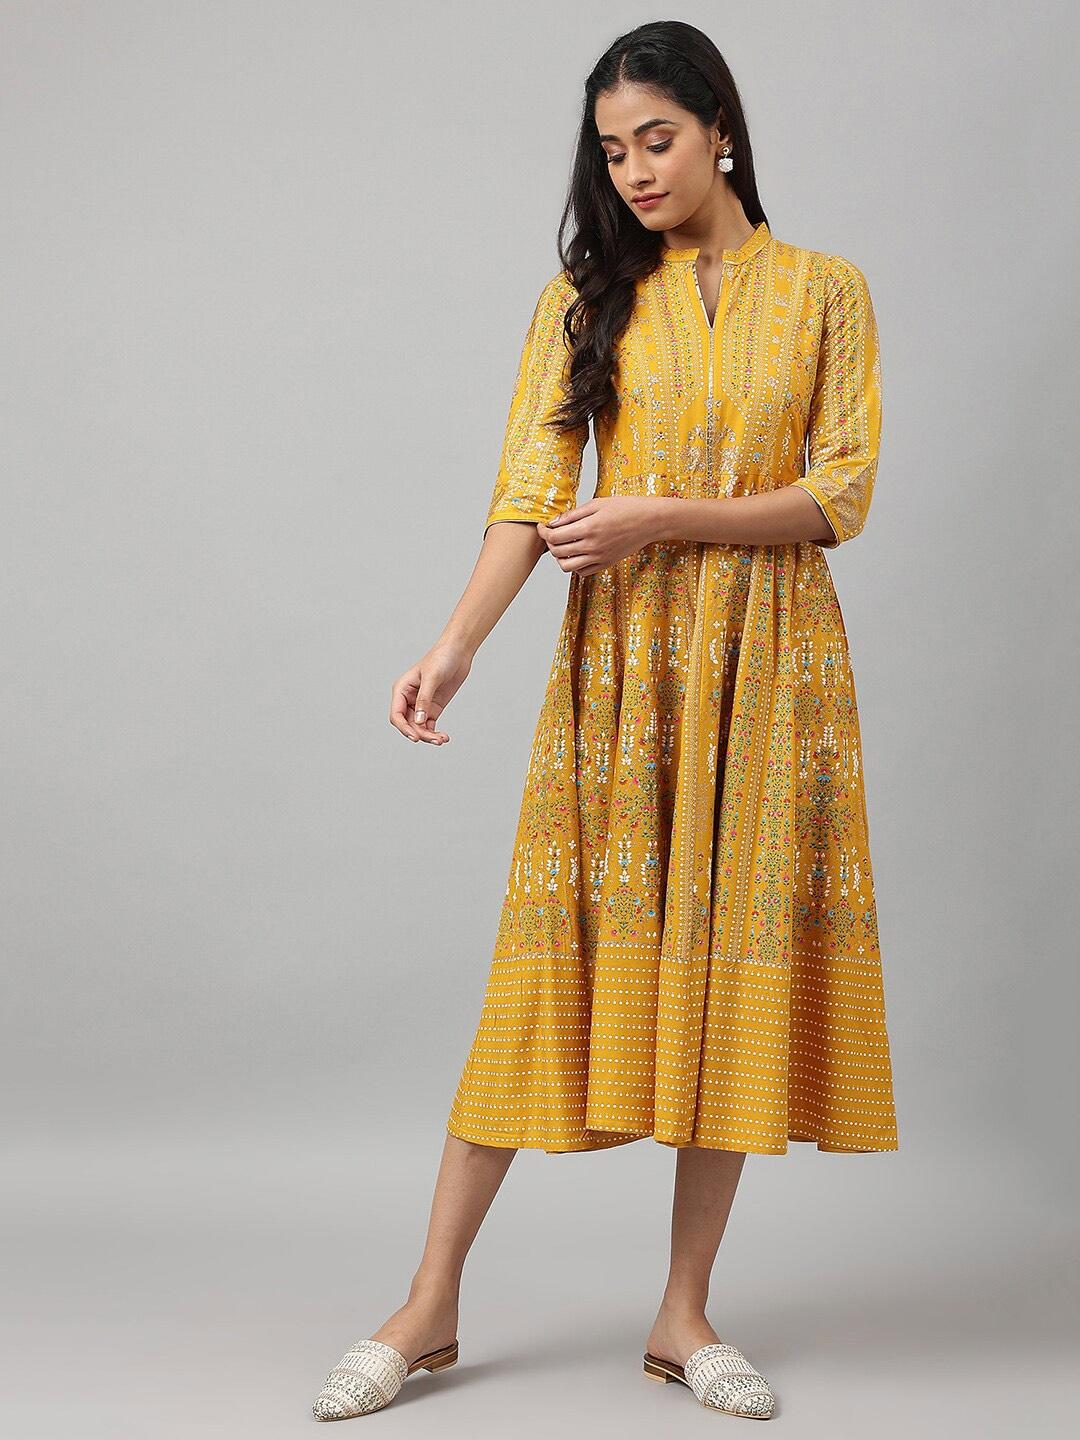 W Yellow Ethnic Motifs Chiffon Ethnic A-Line Midi Dress